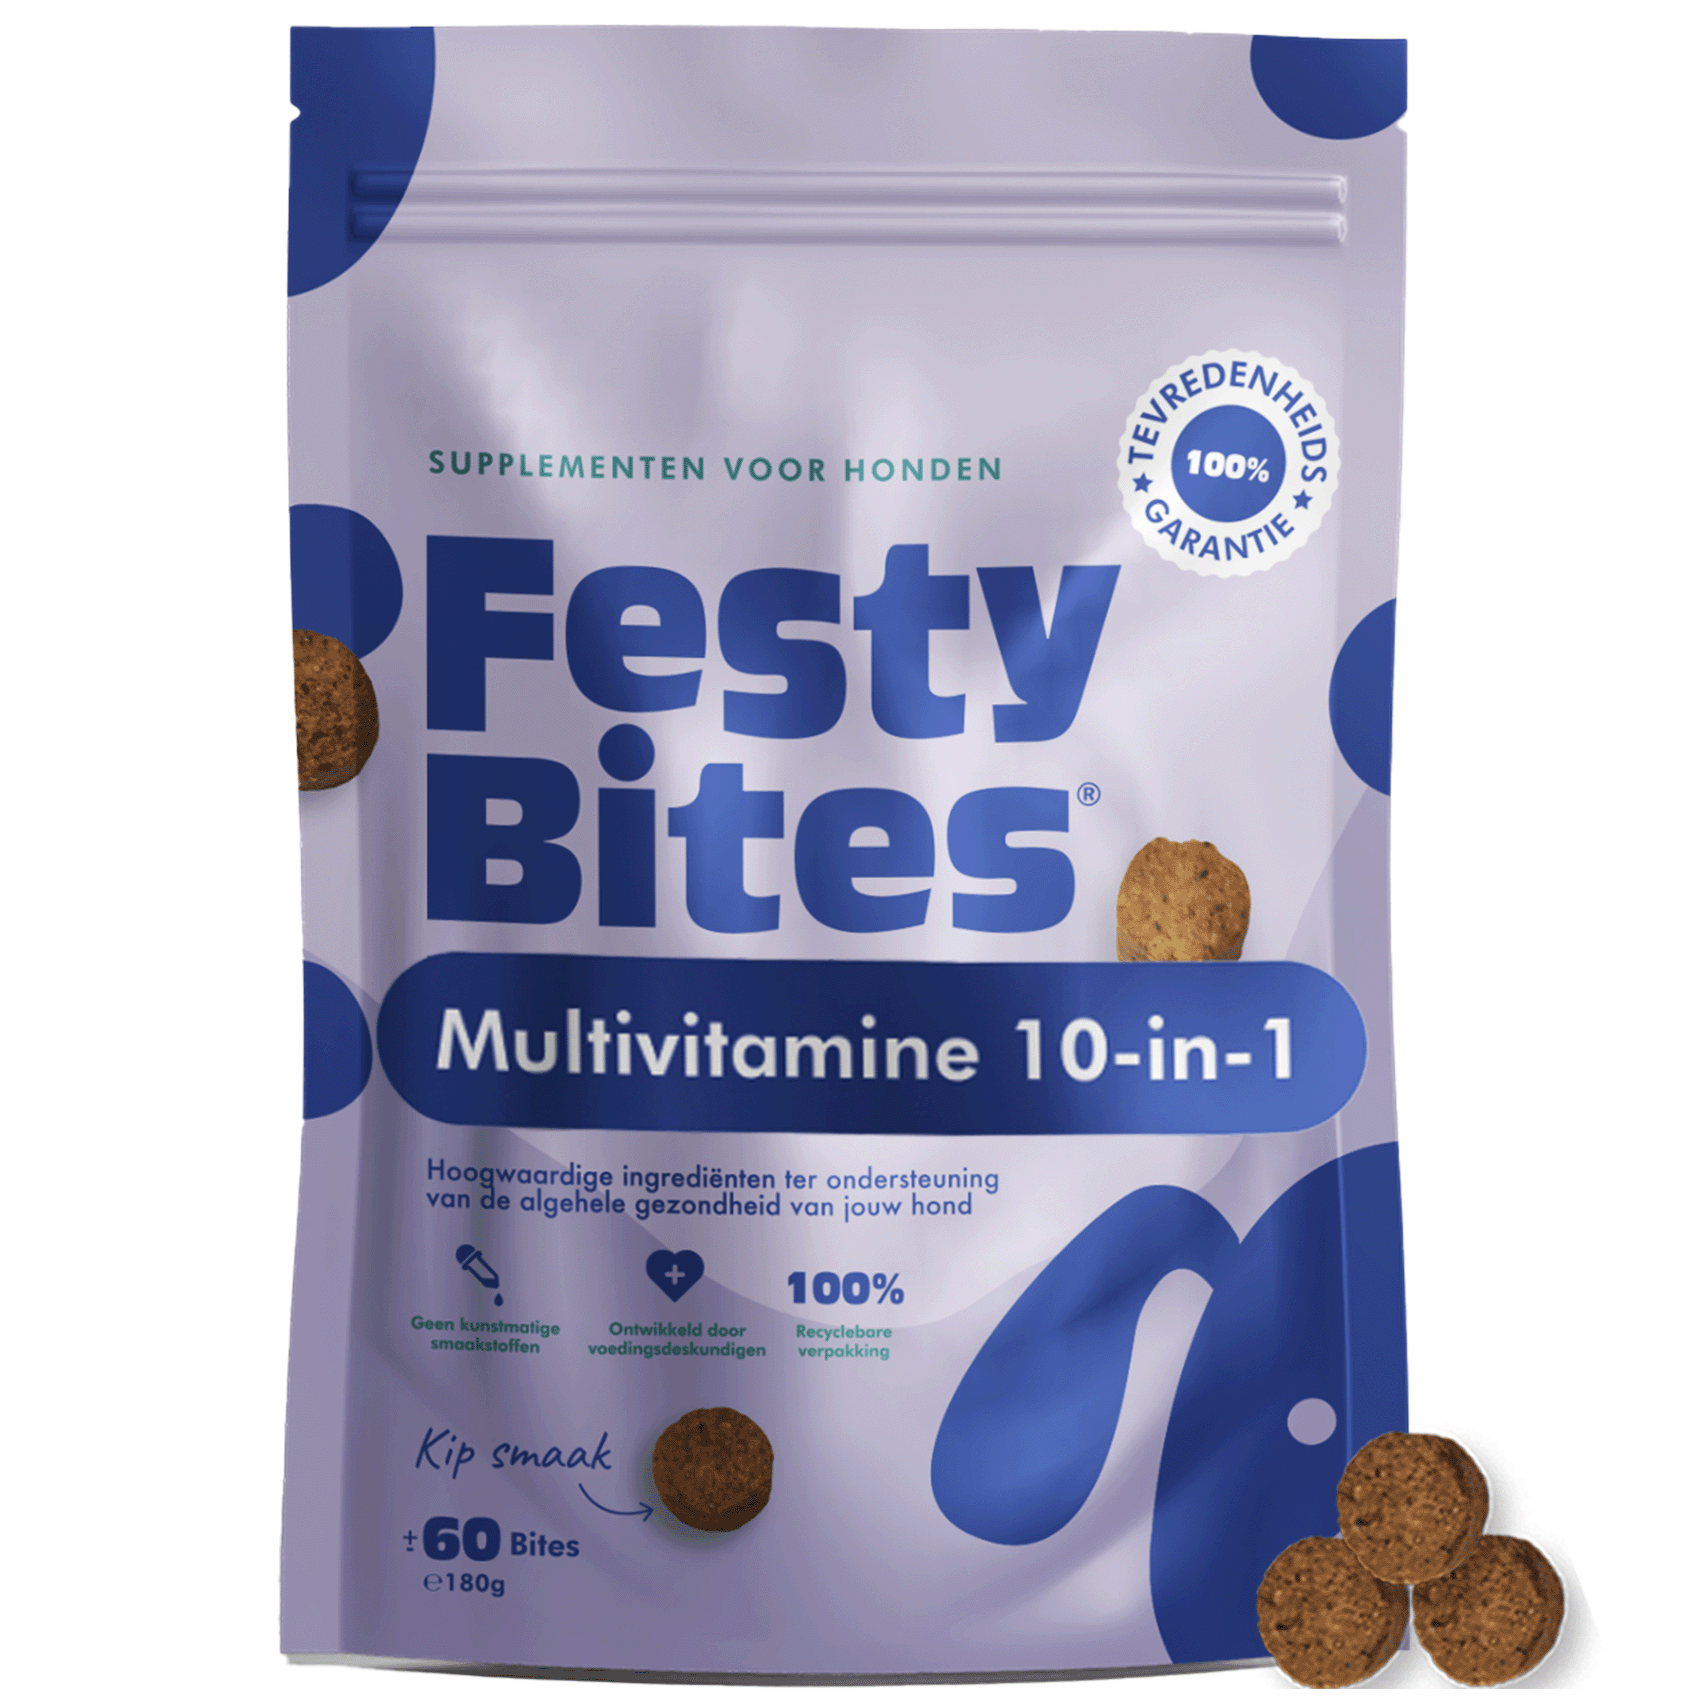 FestyBites® Multivitaminen 10-in-1